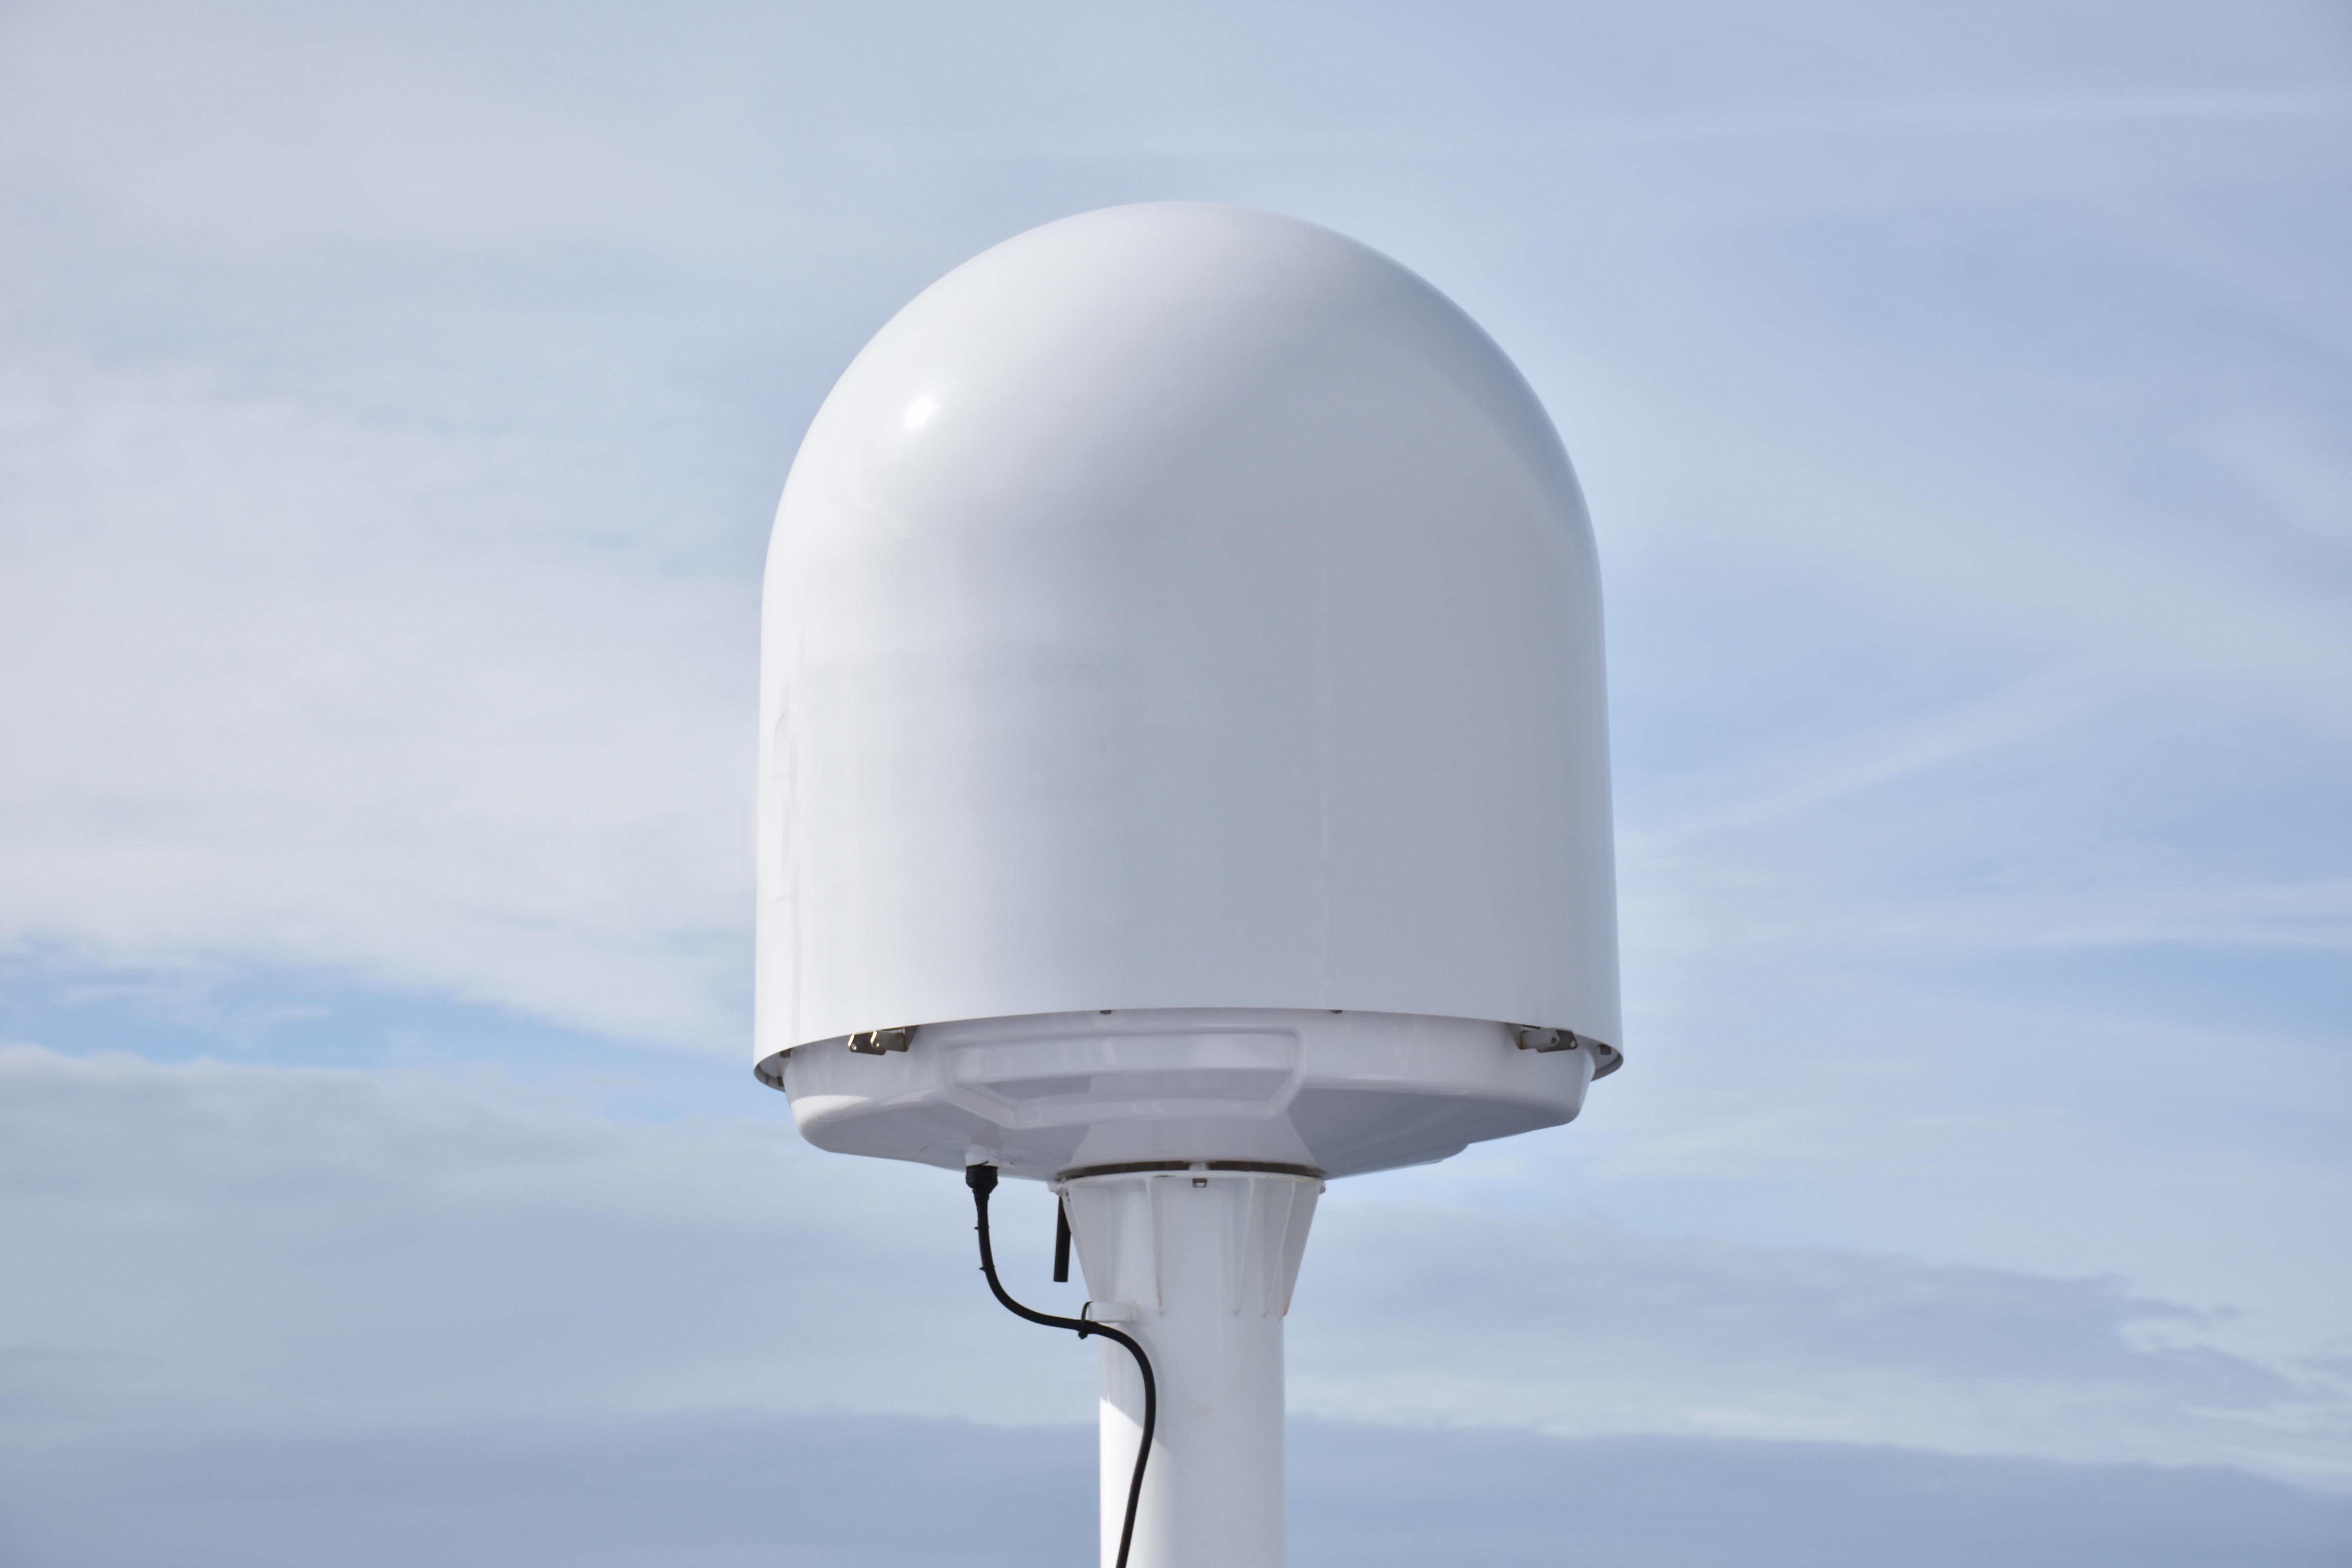 Inmarsat antenna dome